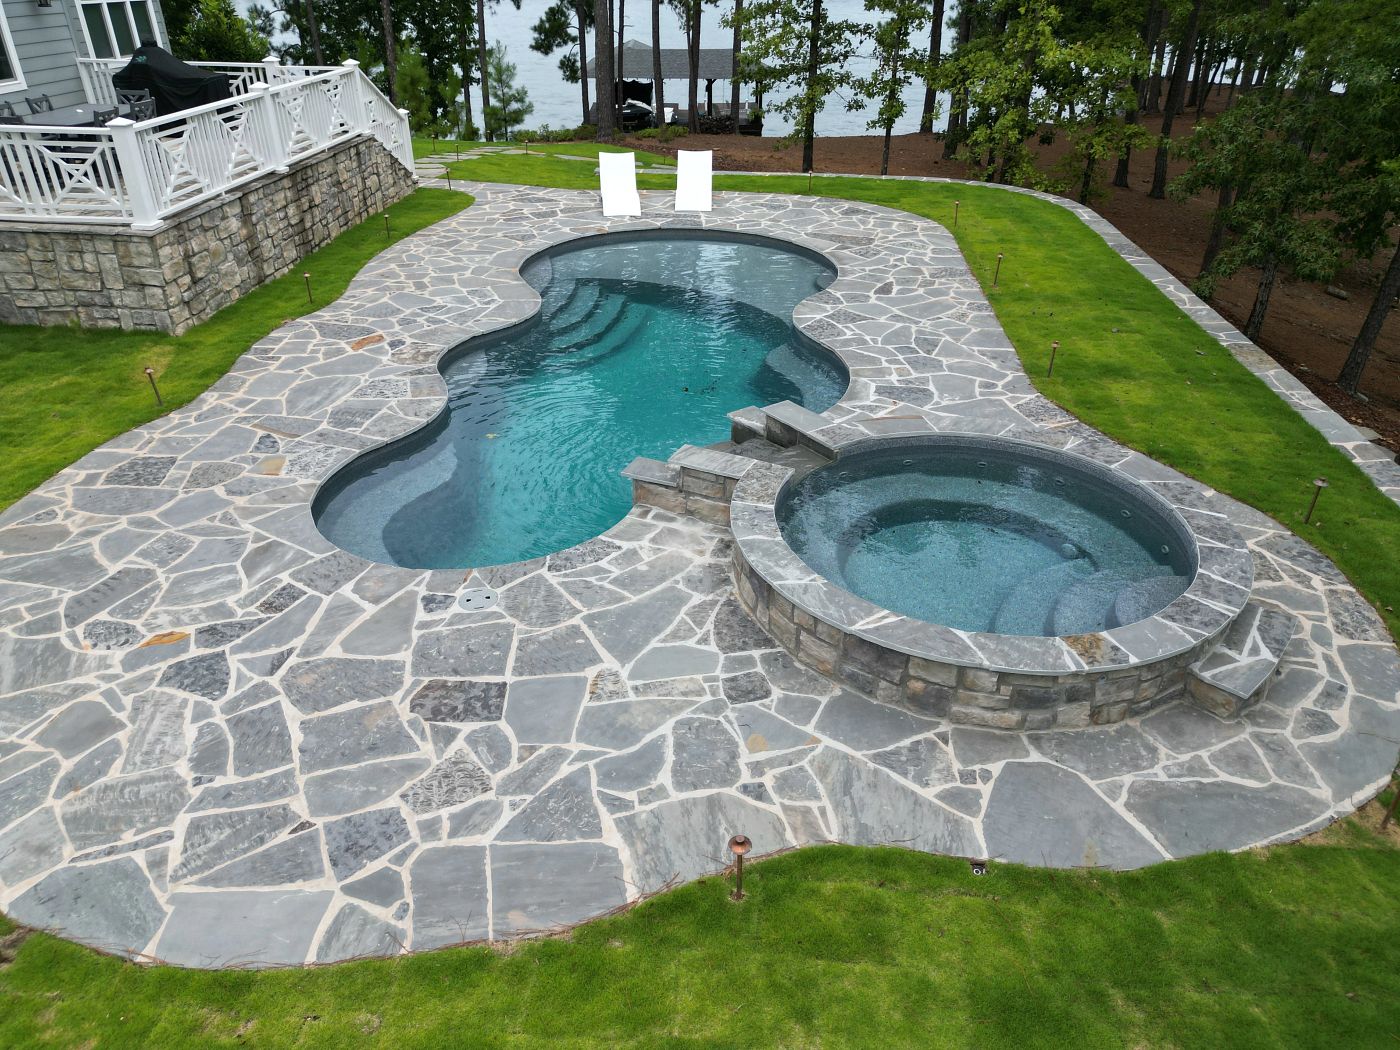 freeform fiberglass pool with spa in Alabama backyard